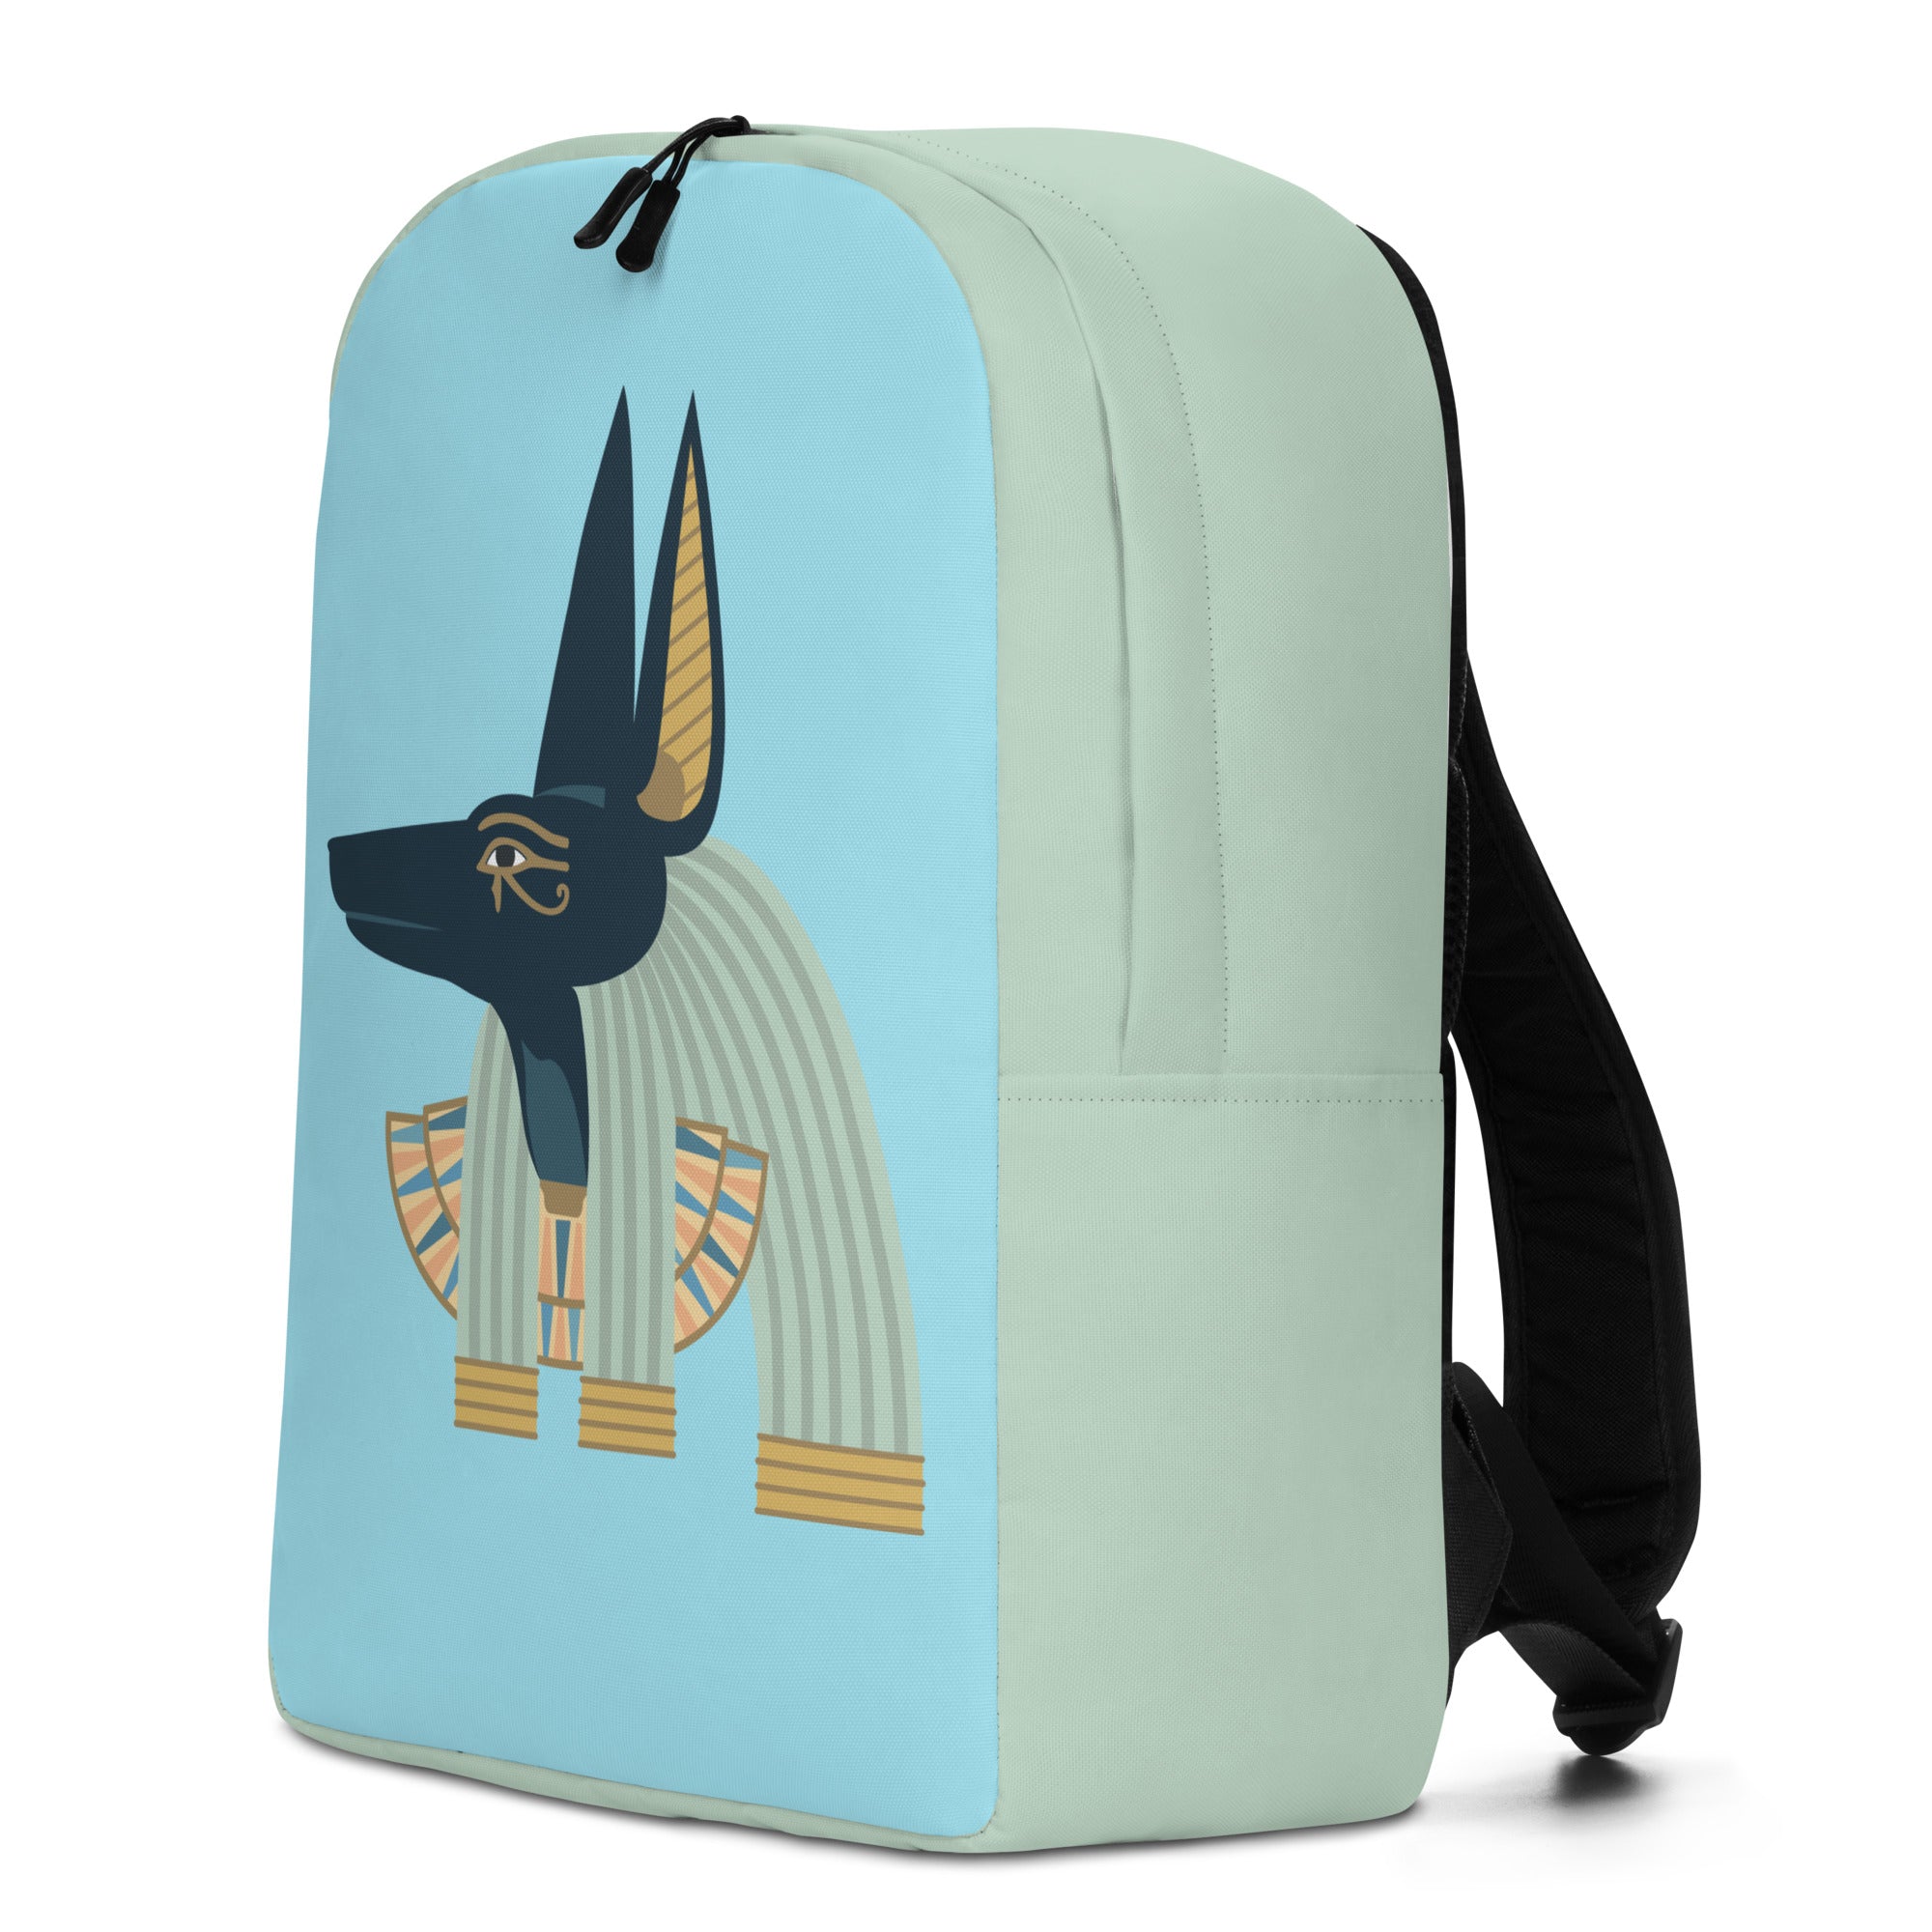 Anubis backpack